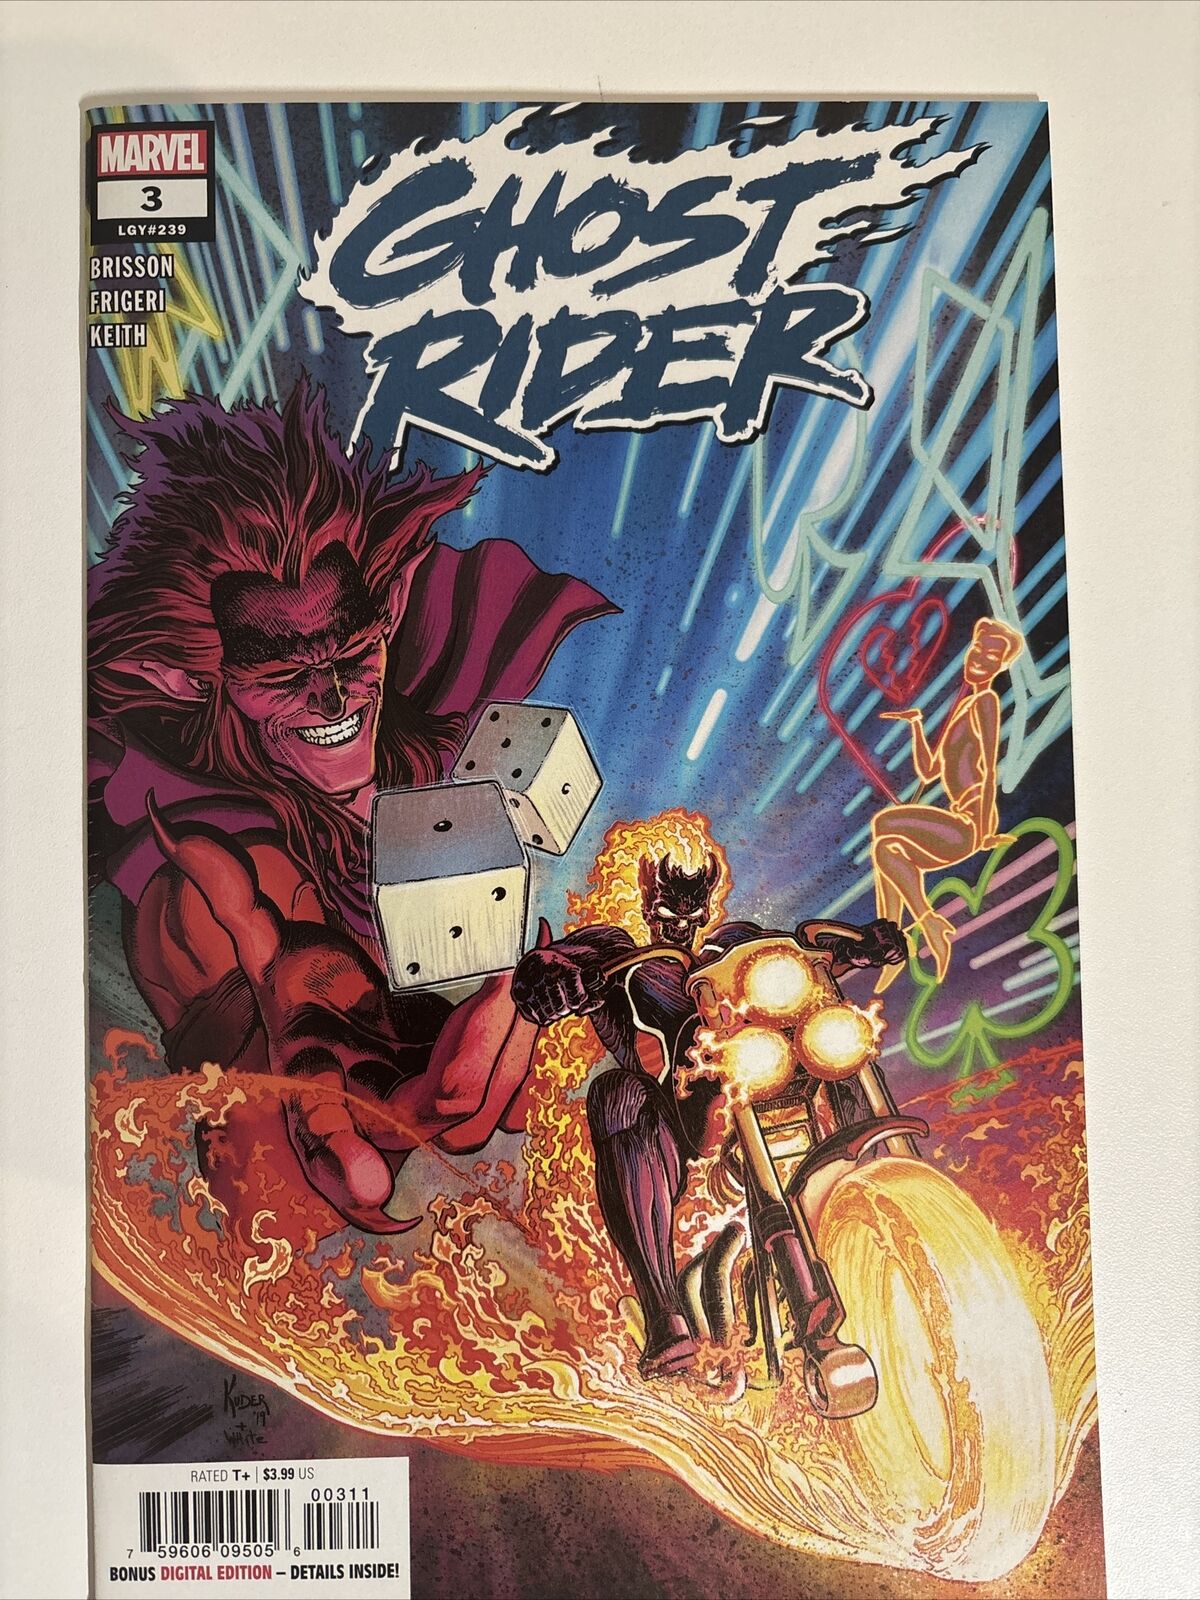 Ghost Rider #3 (LGY239) (Marvel Comics February 2020)